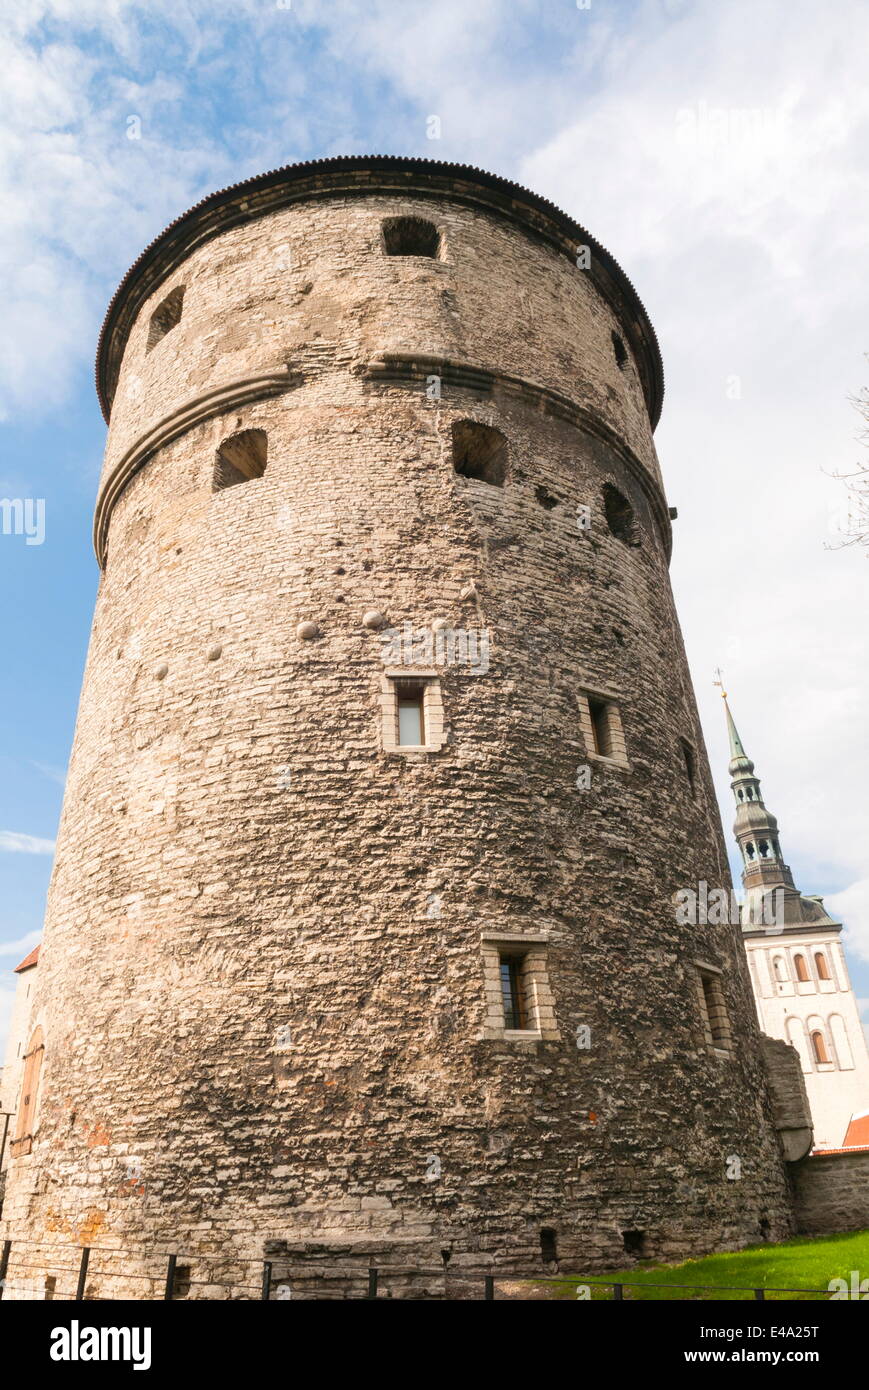 Kiek in de Kok tower, UNESCO World Heritage Site, Tallinn, Estonie, pays Baltes, Europe Banque D'Images